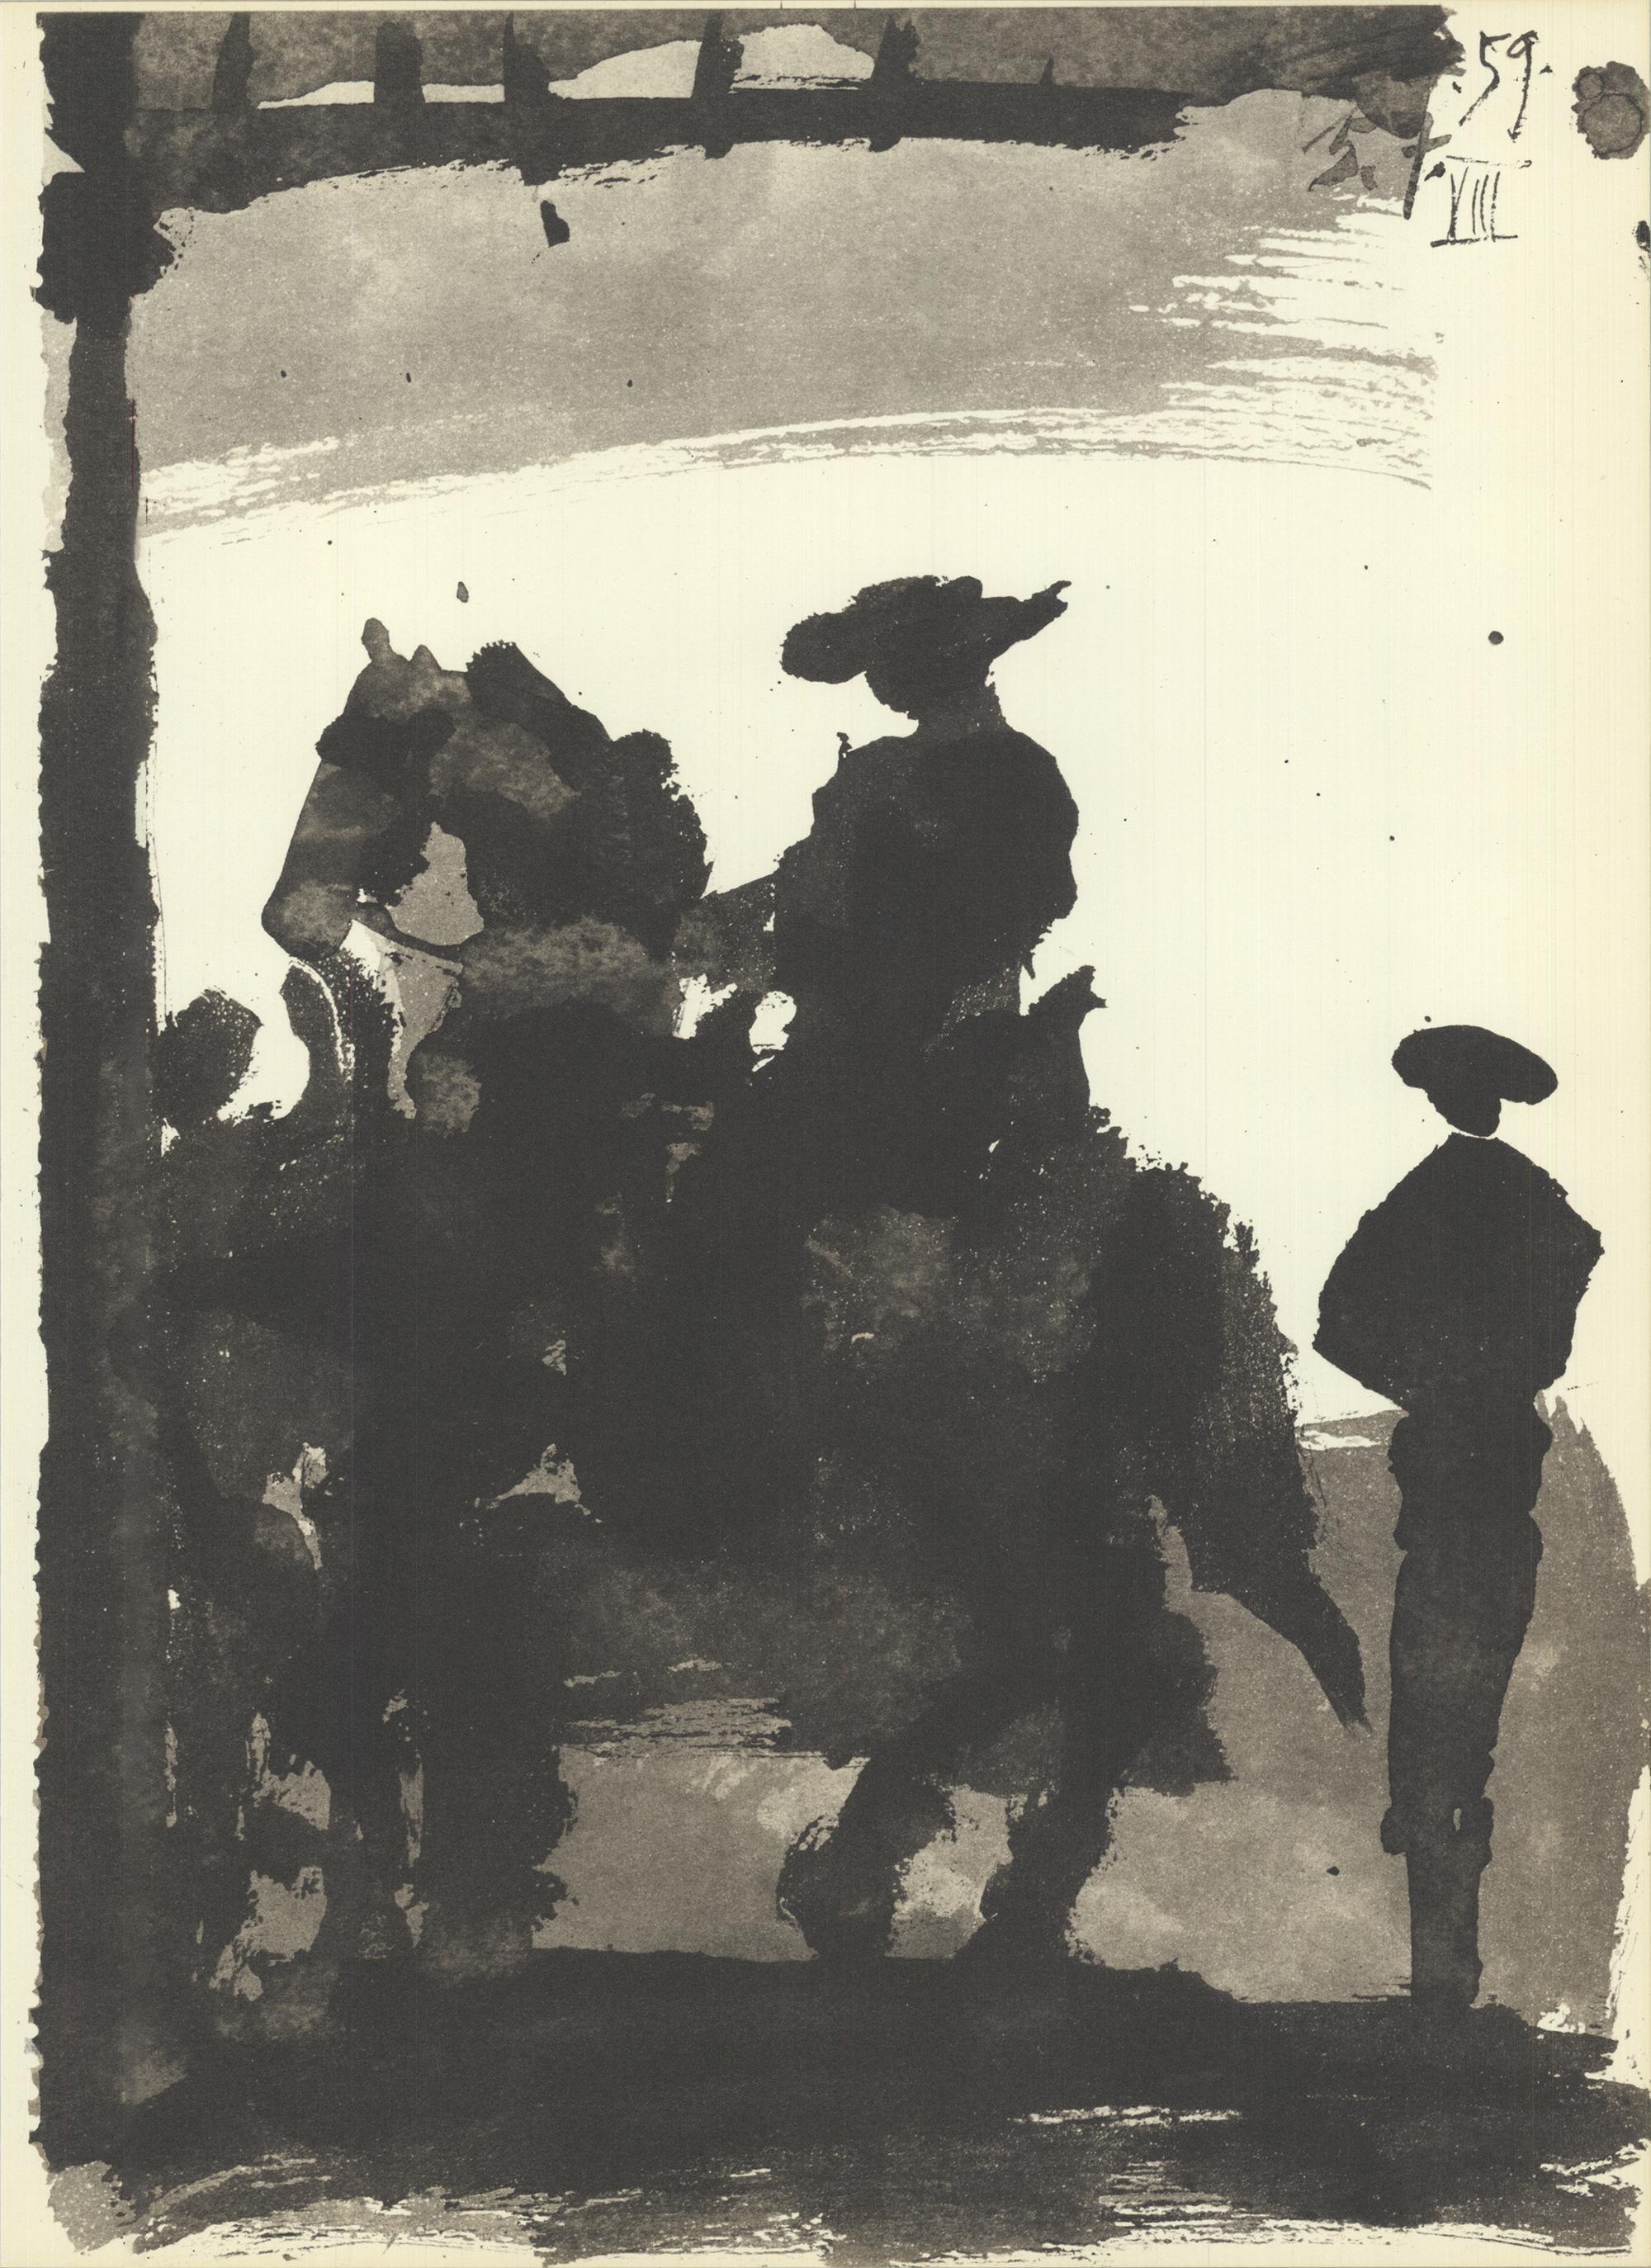 From Toros y Toreros, texte de Luis Miguel Dominguin, published by Editions Cercles D'Art. 